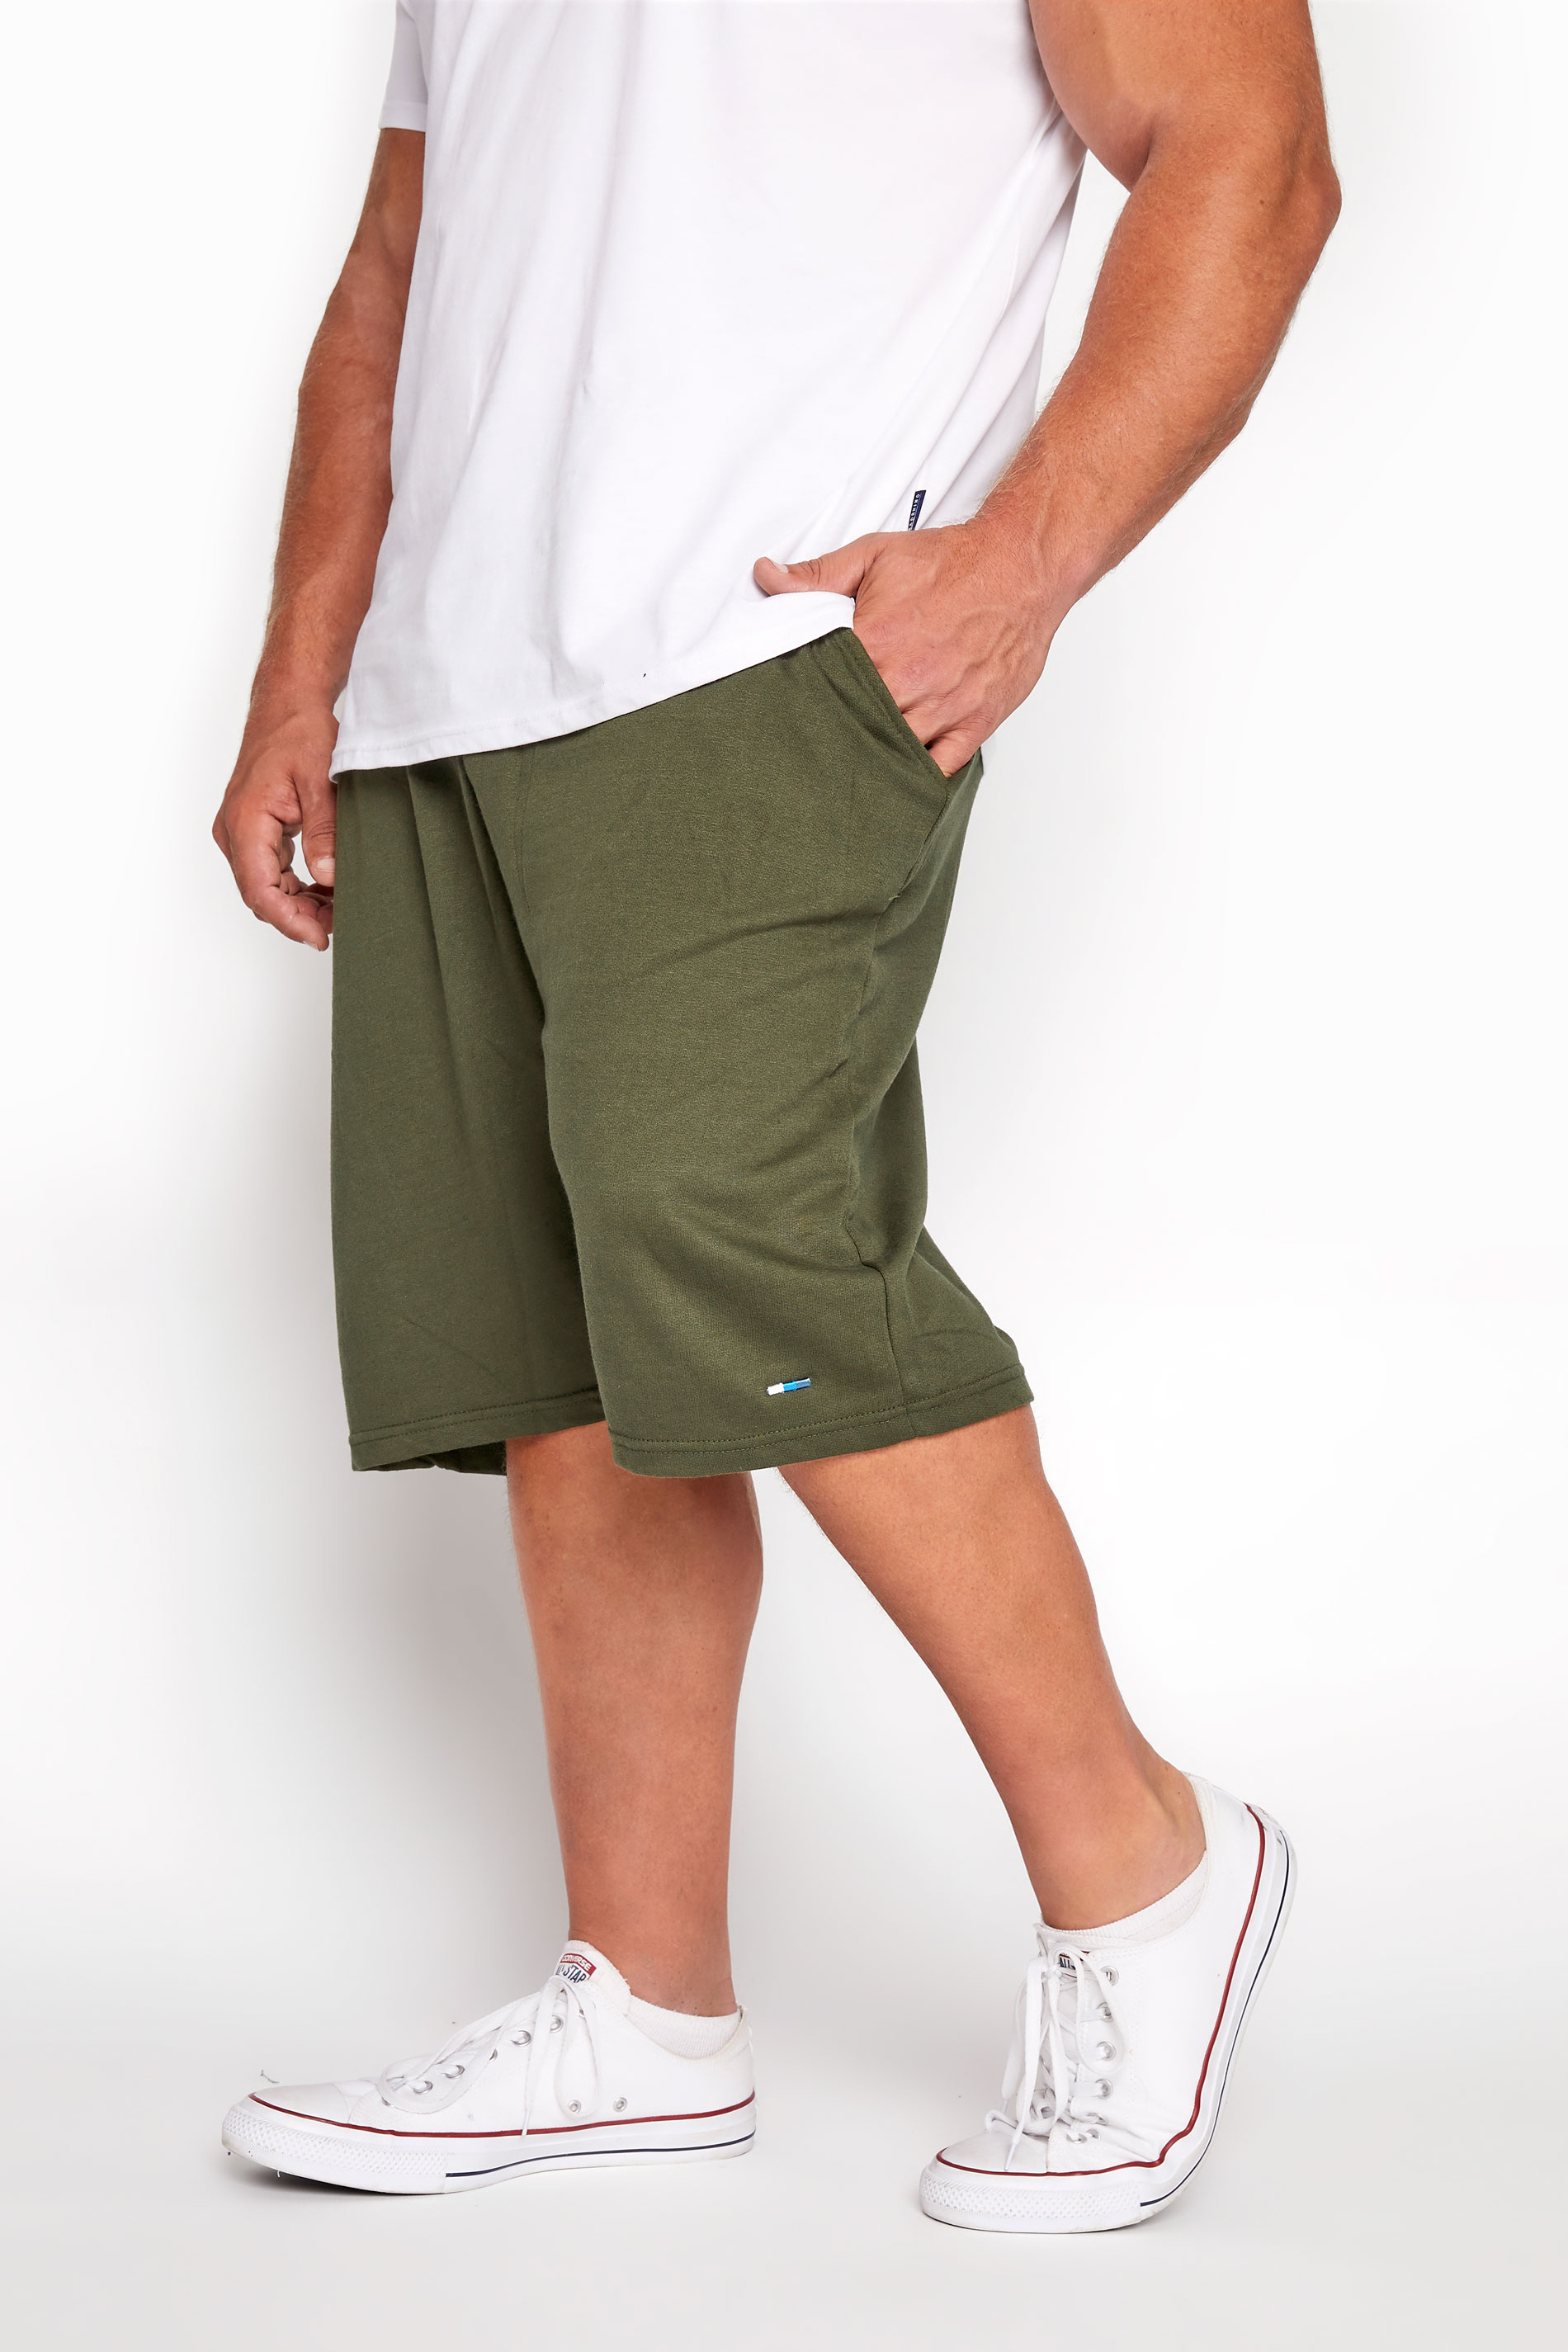 BadRhino Khaki Green Essential Jogger Shorts | BadRhino 2